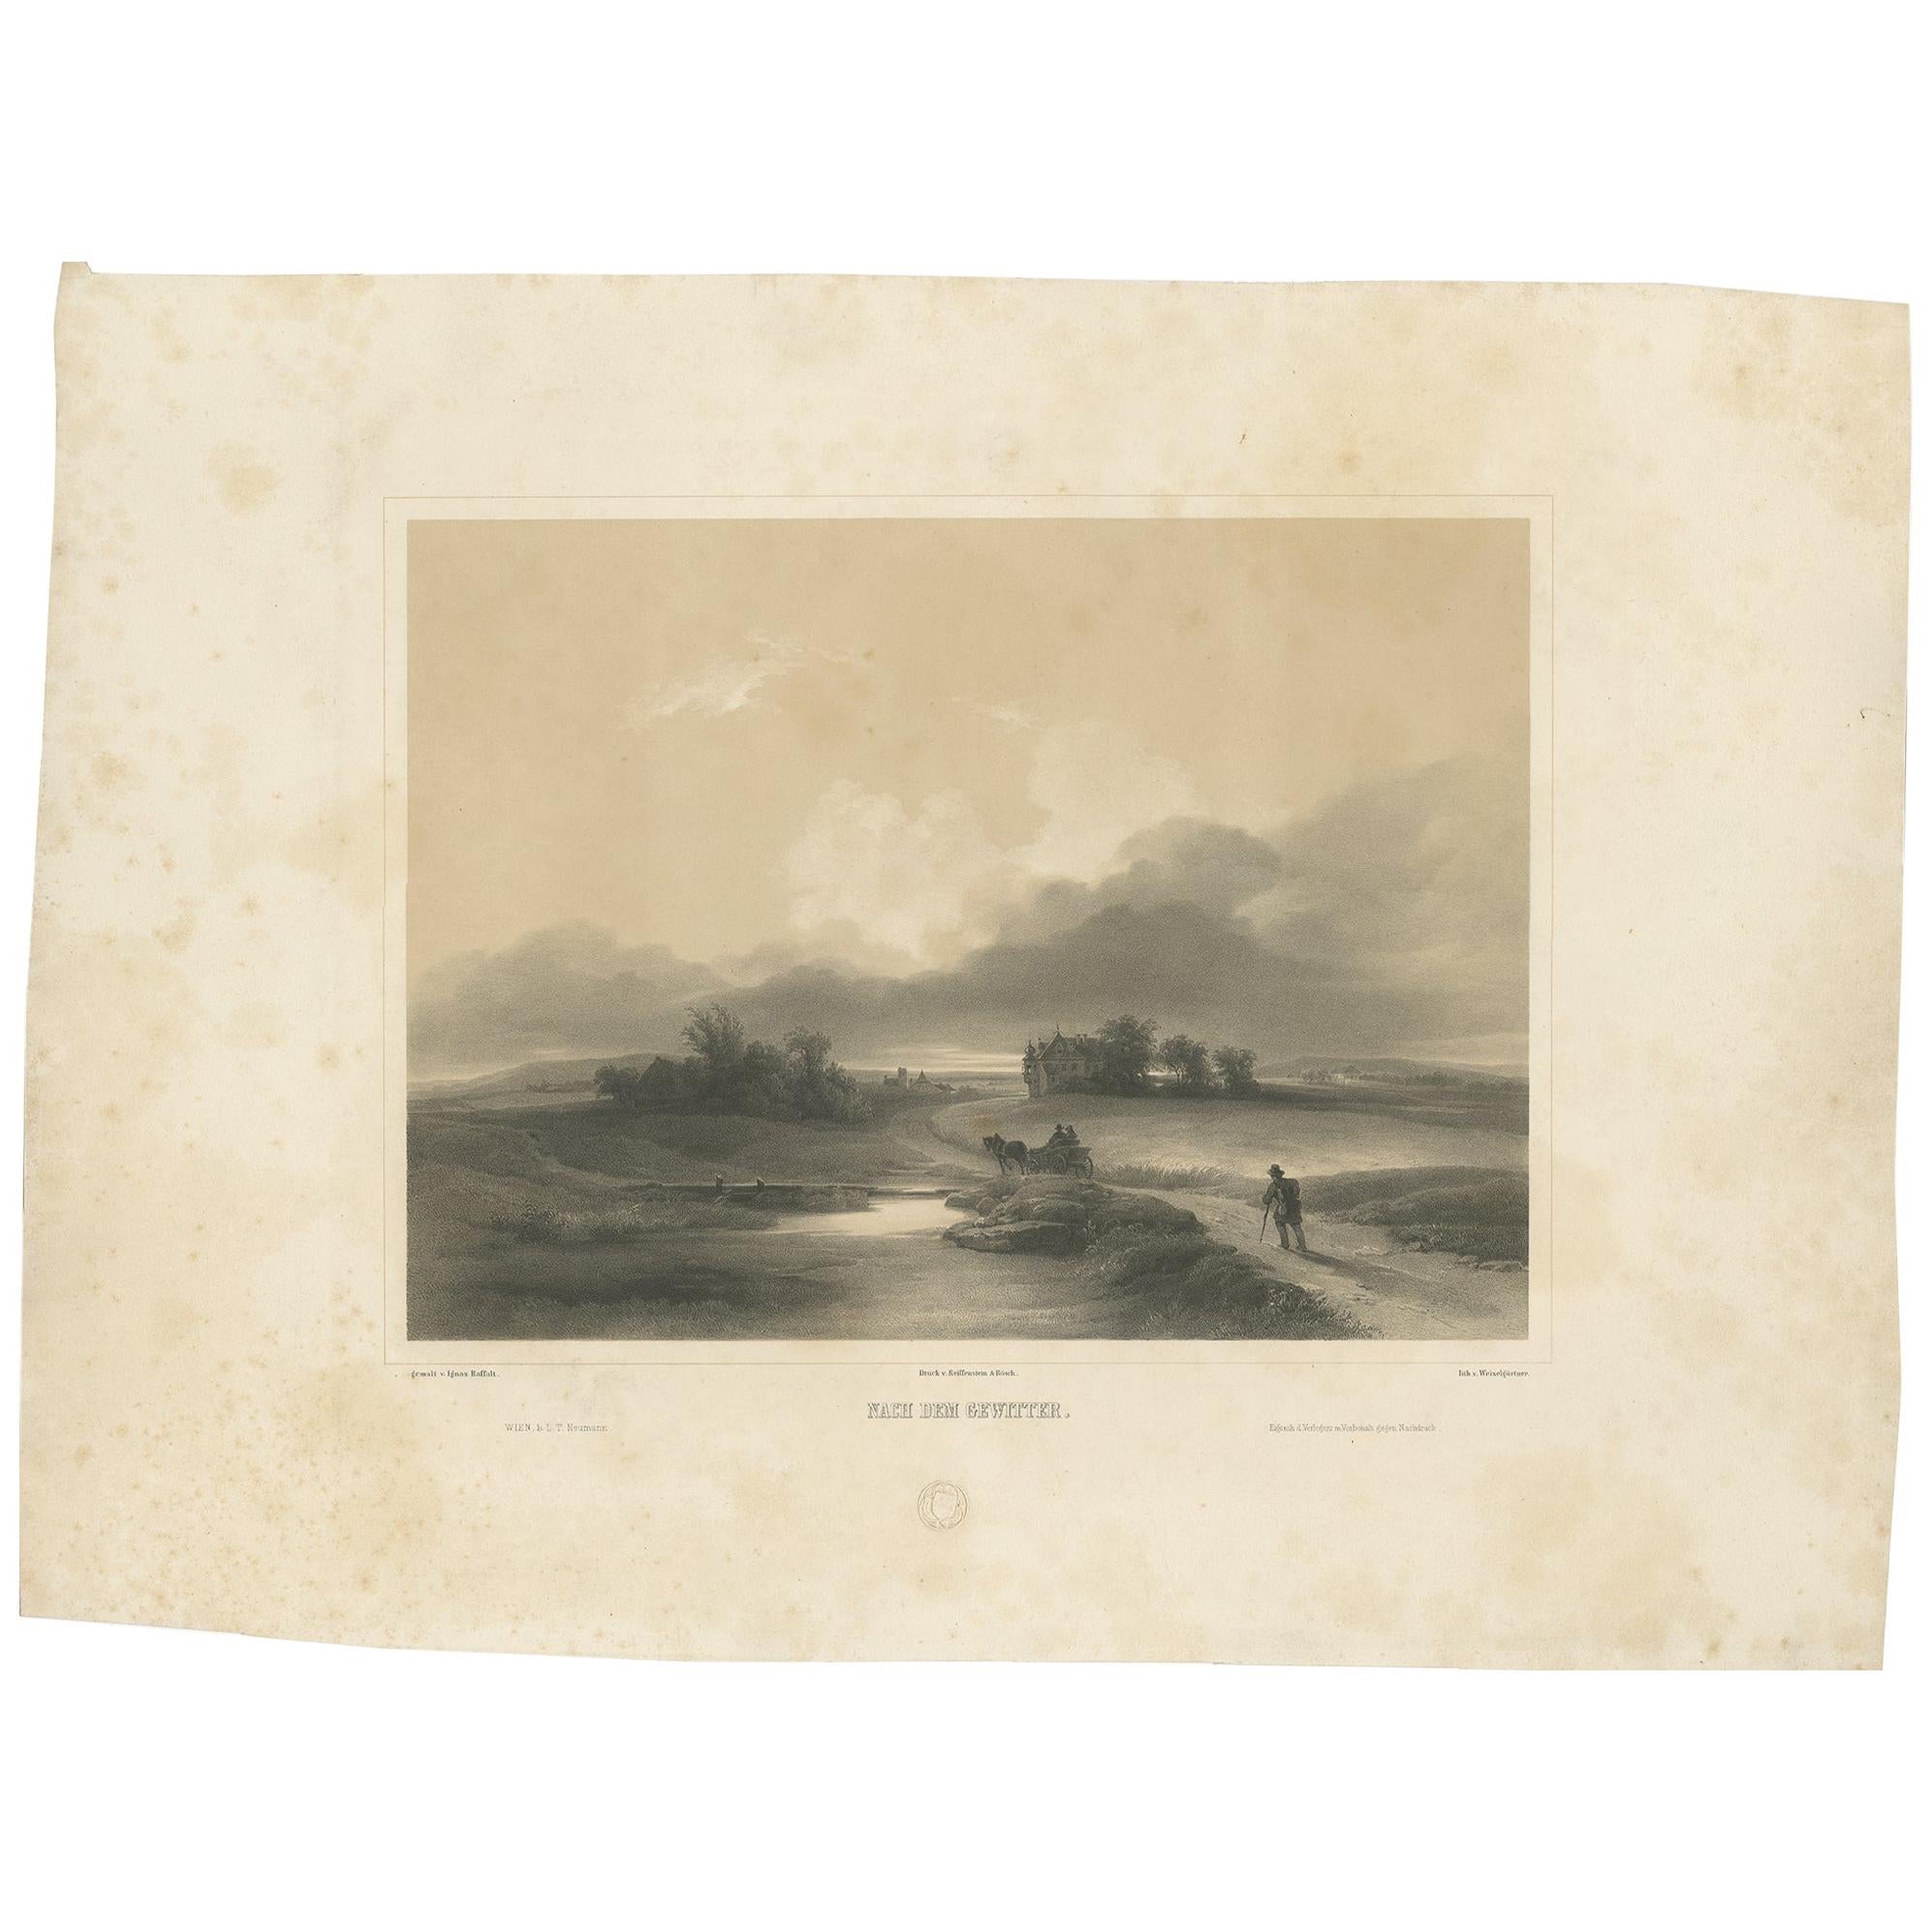 Antique Print of a Landscape after a Thunderstorm by Weixelgartner, 'c.1860'